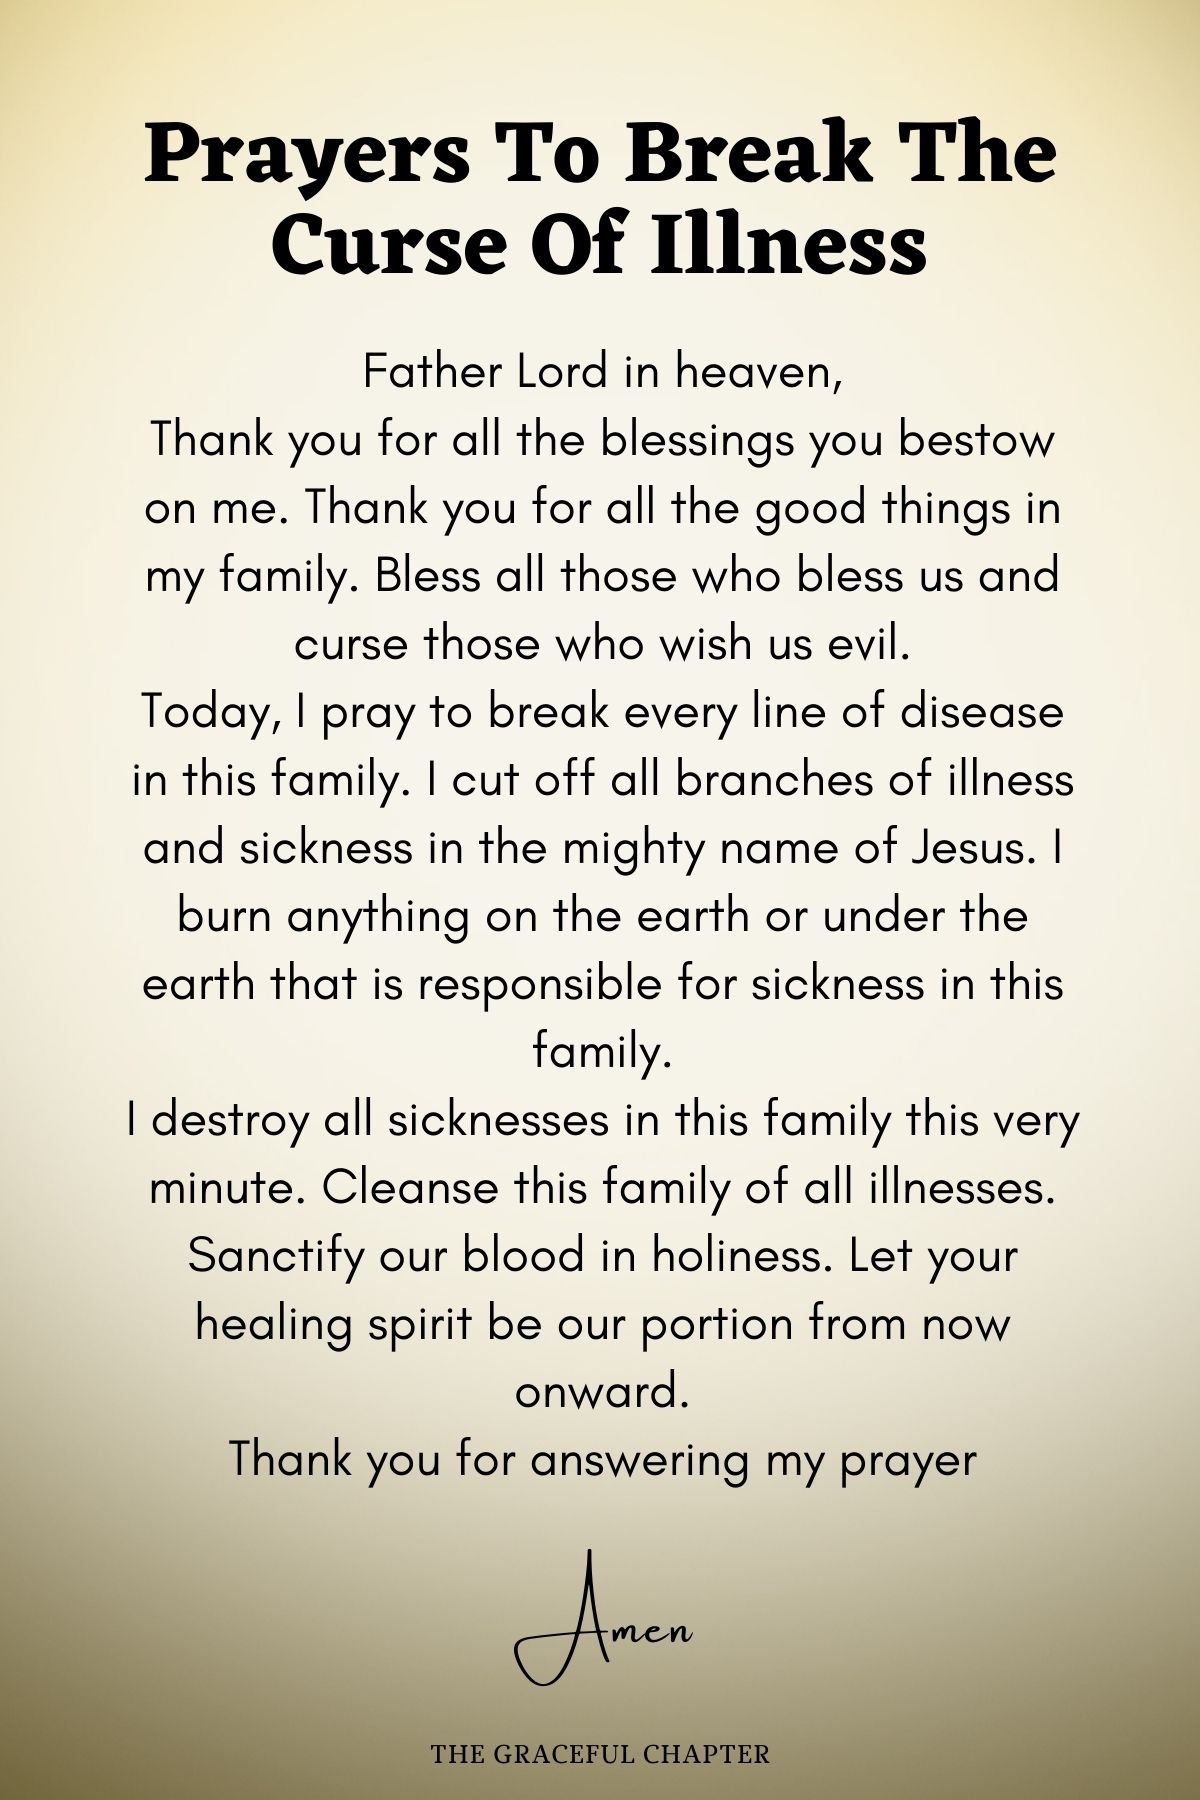 Prayers to break the curse of illness